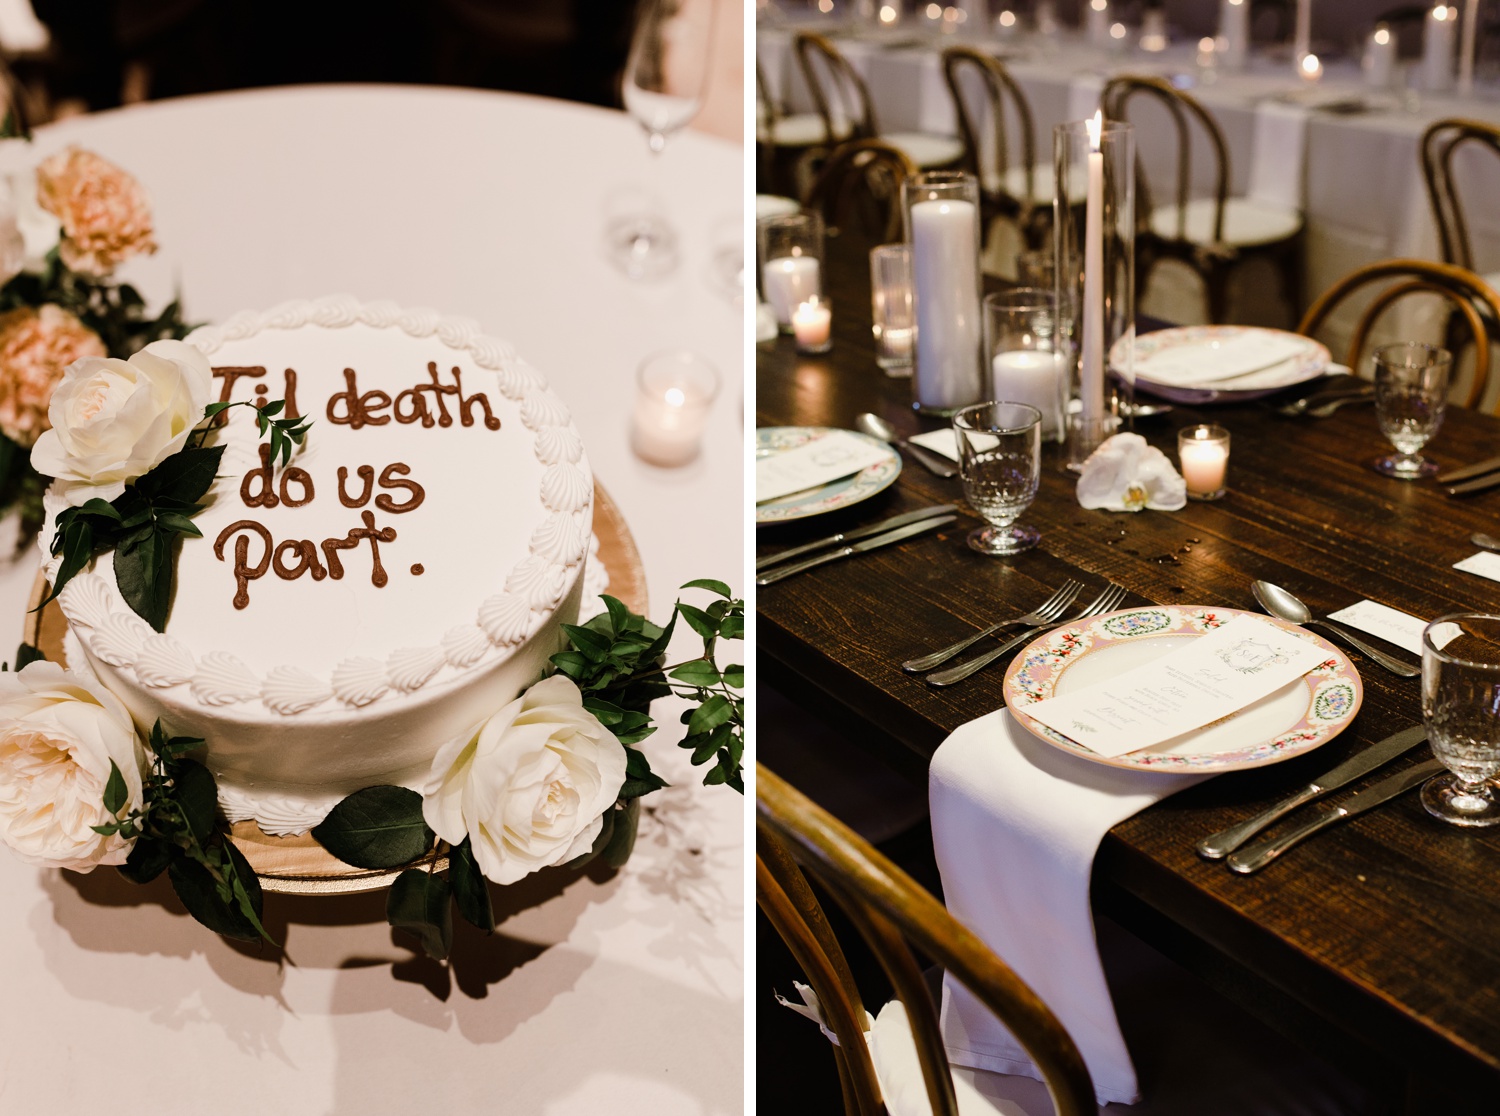 "Til death do us part" wedding cake with white roses